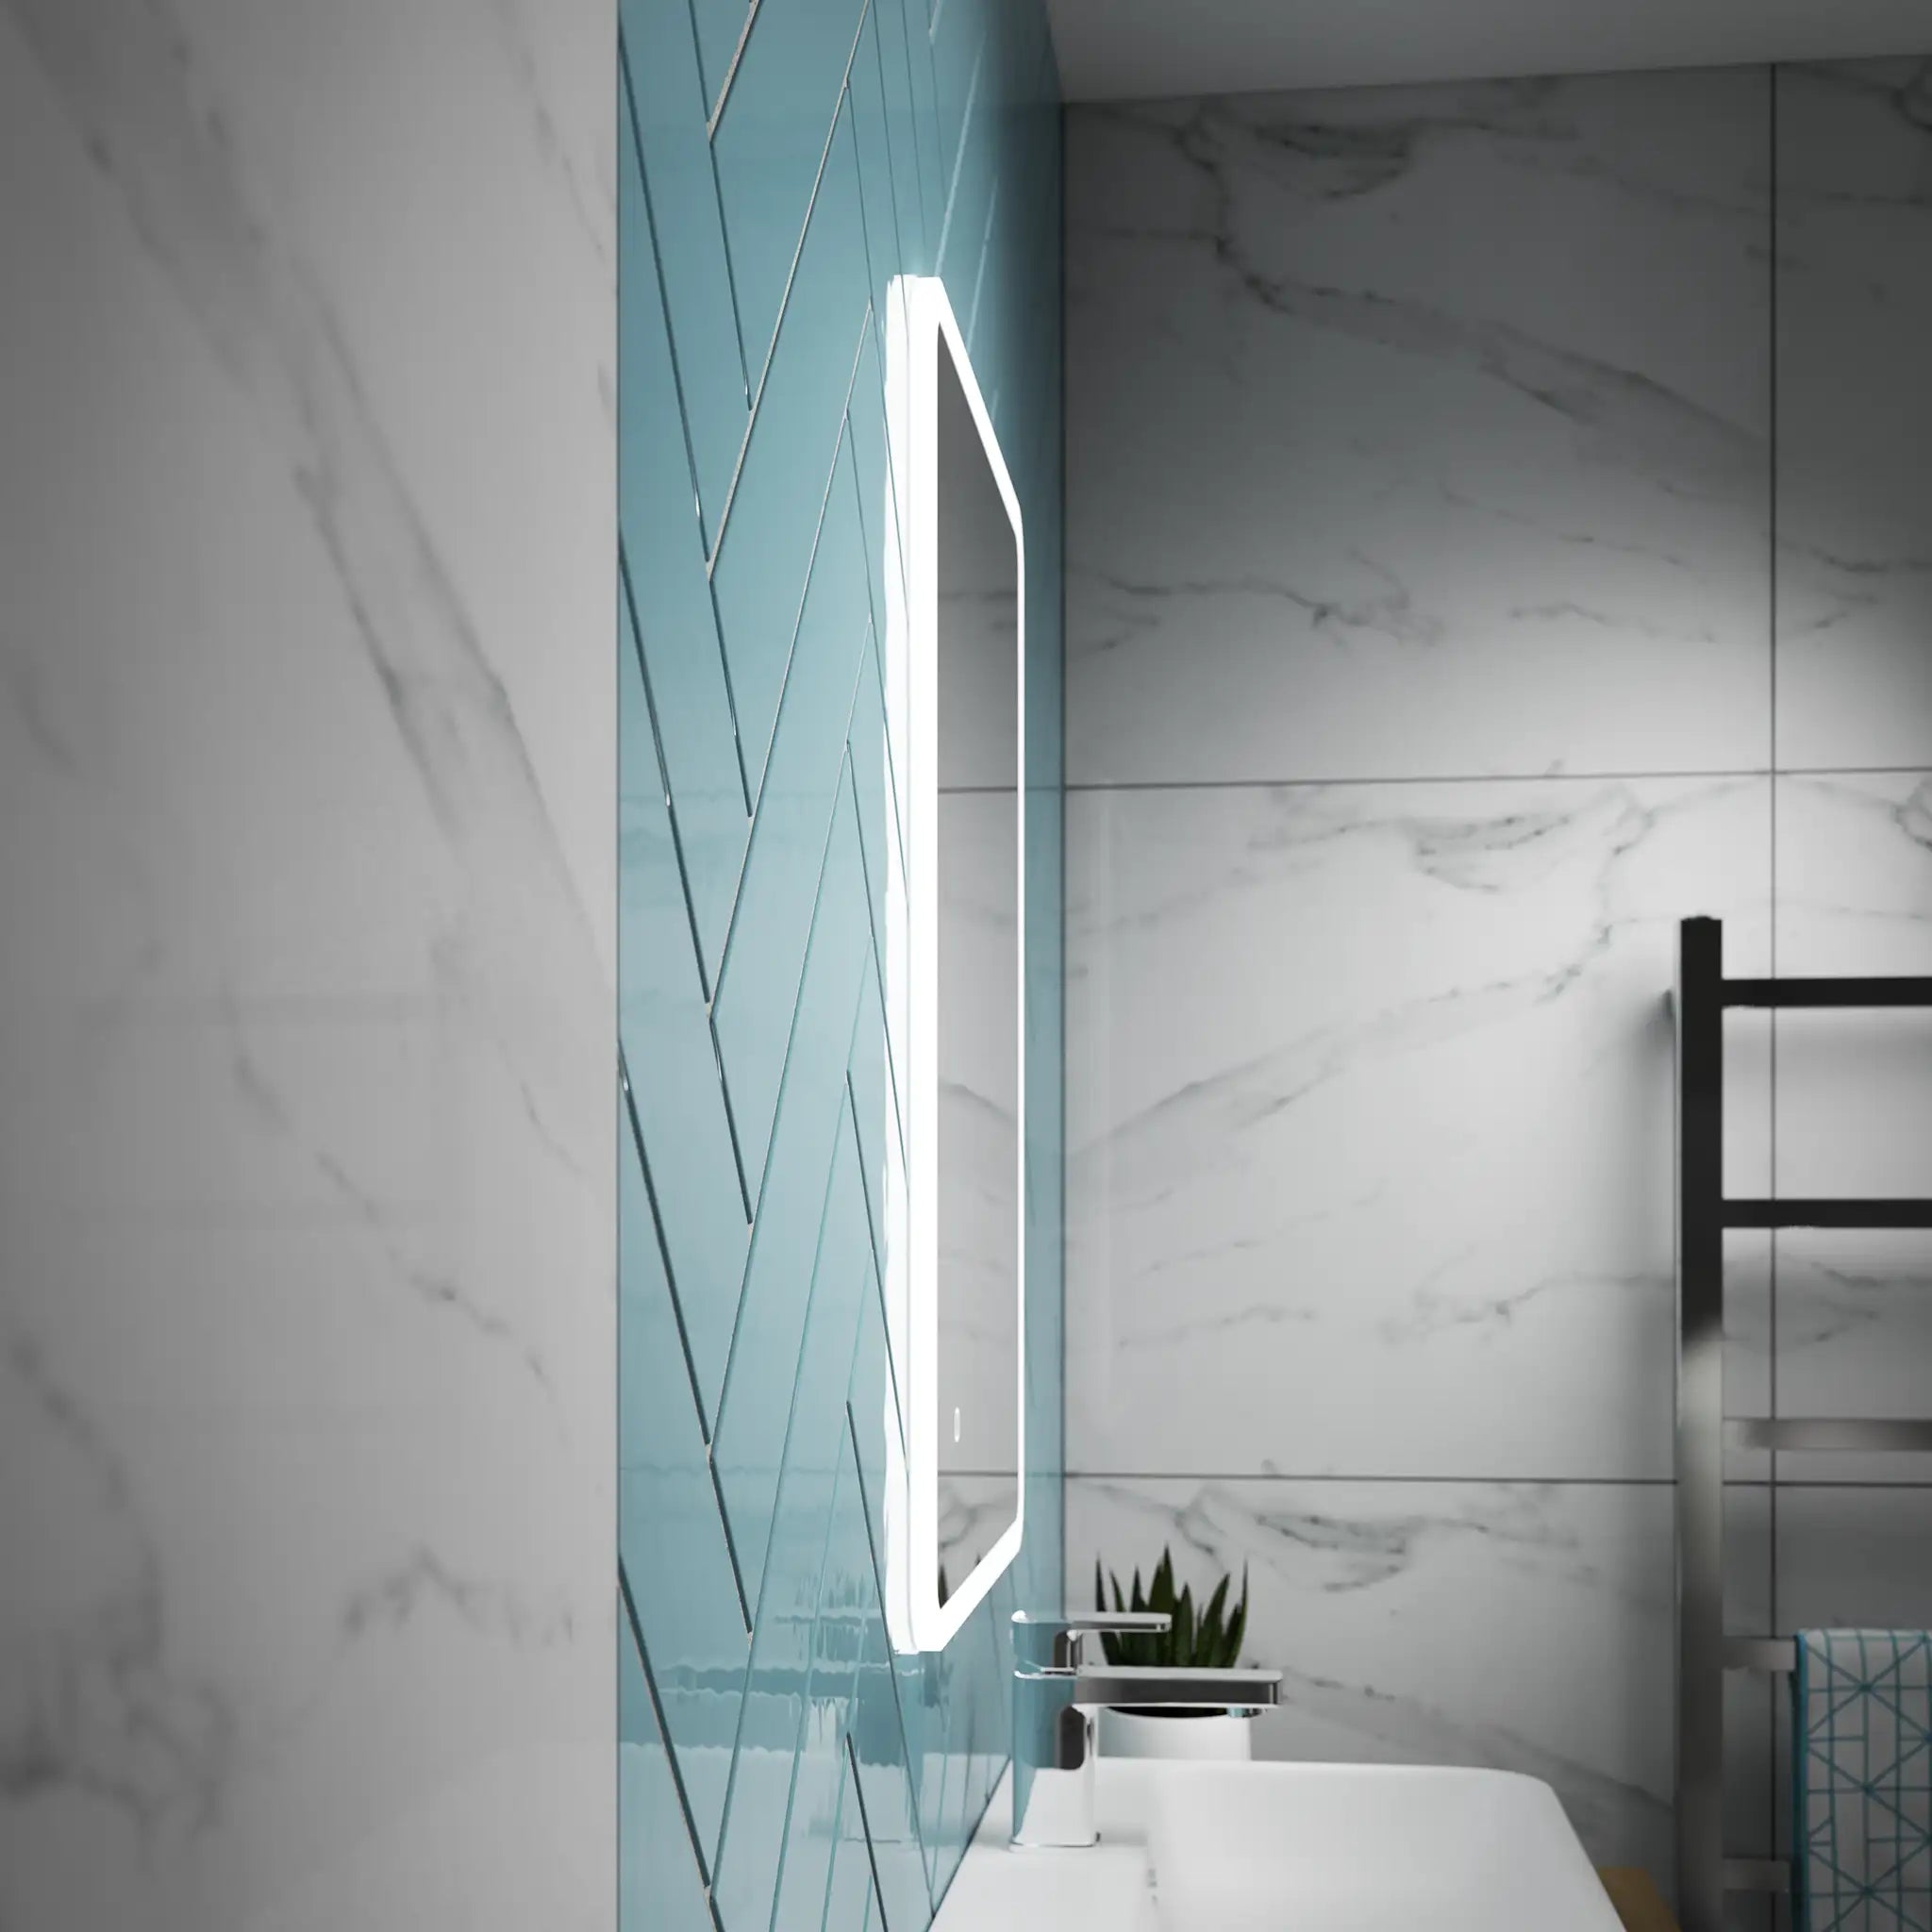 Nano Ultra-slim LED Bathroom Mirror #size_800mm-x-600mm